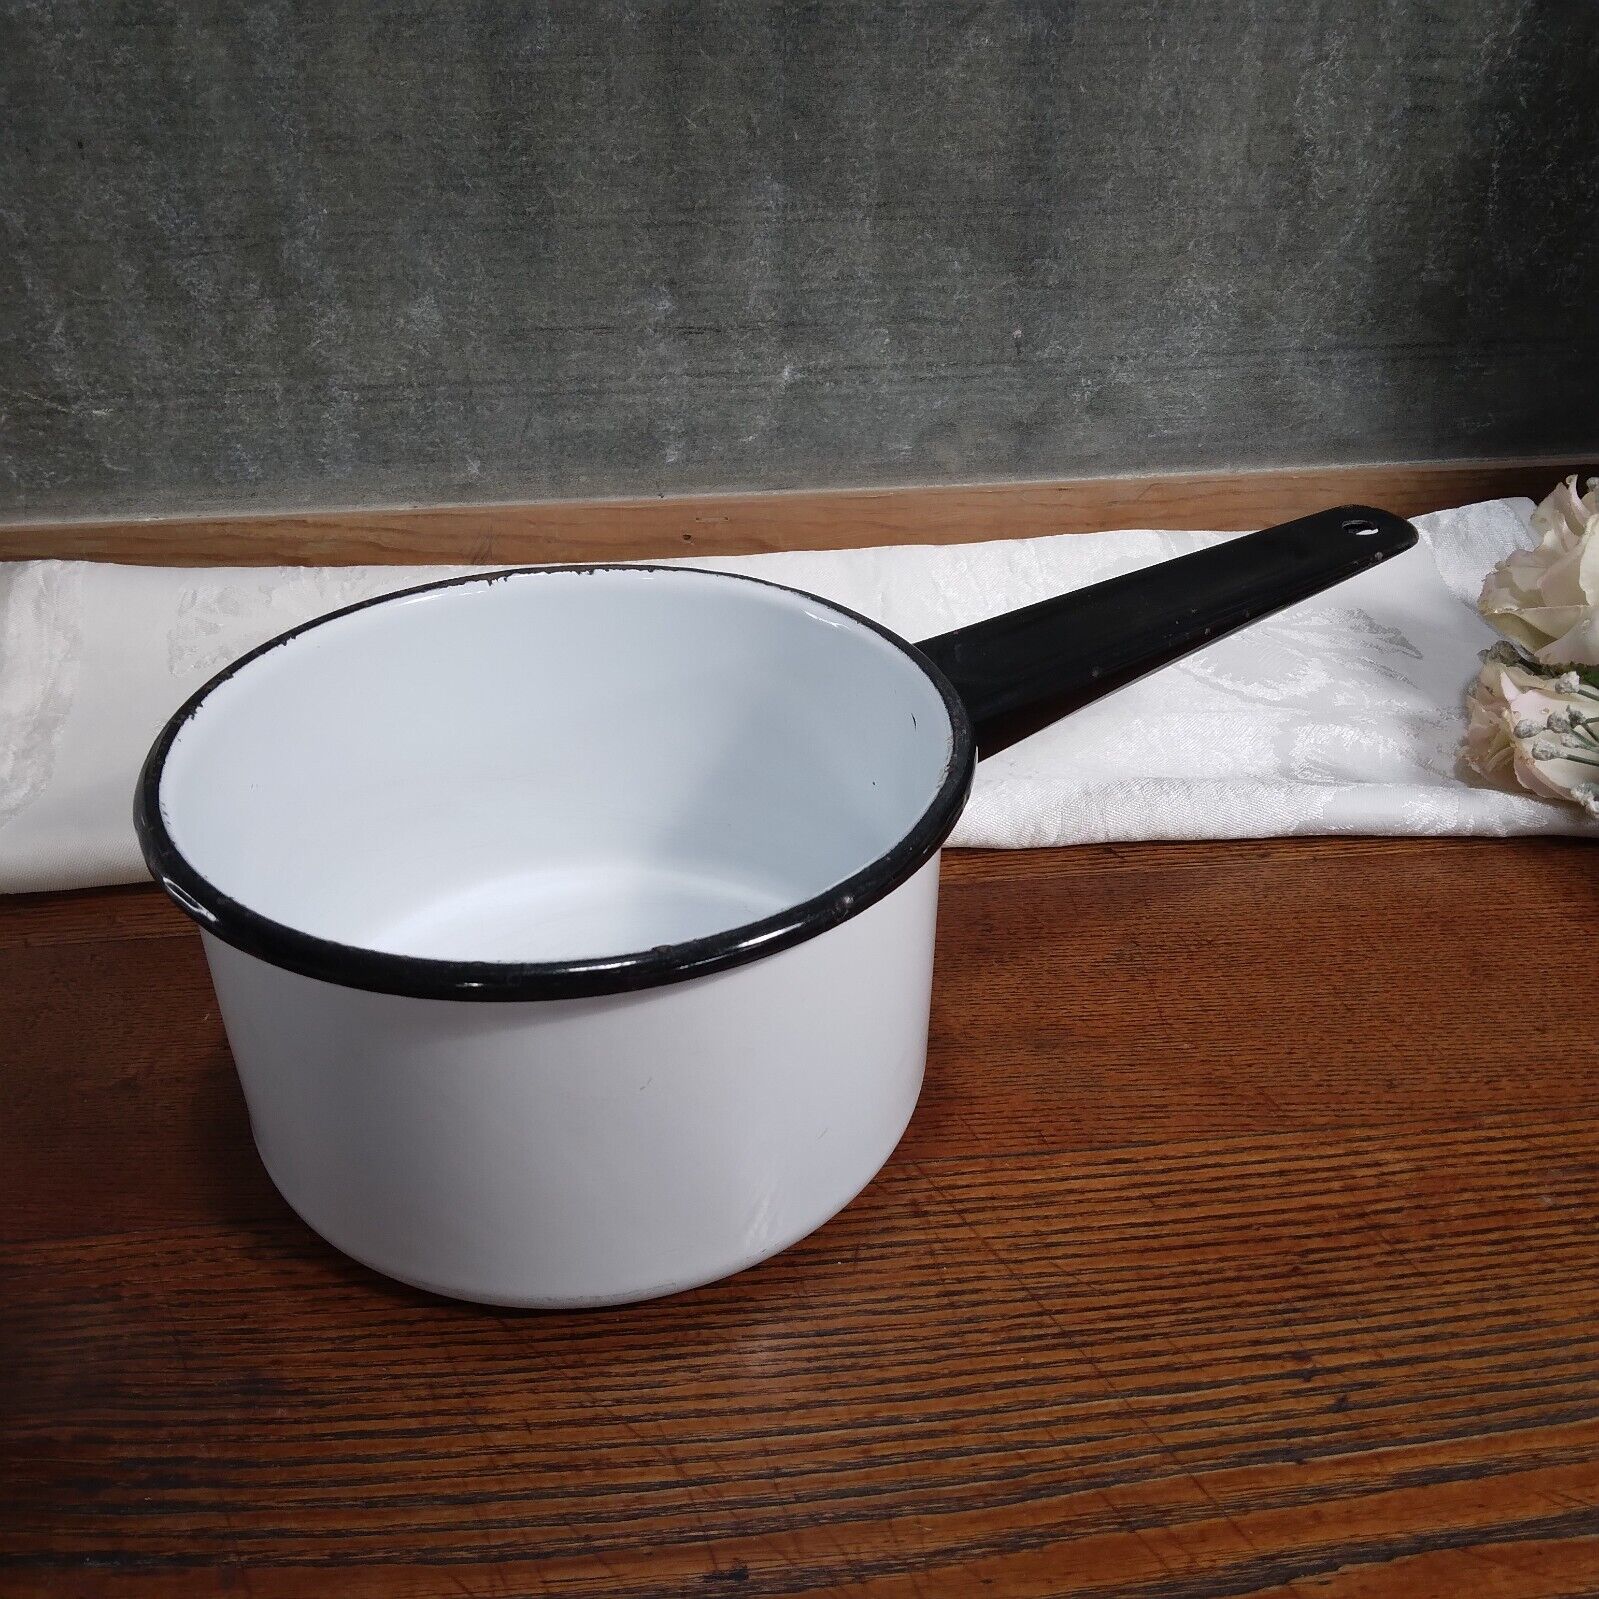 Vintage White With Black Trim Enamel Sauce Pan Small Enamelware Pot with Handle